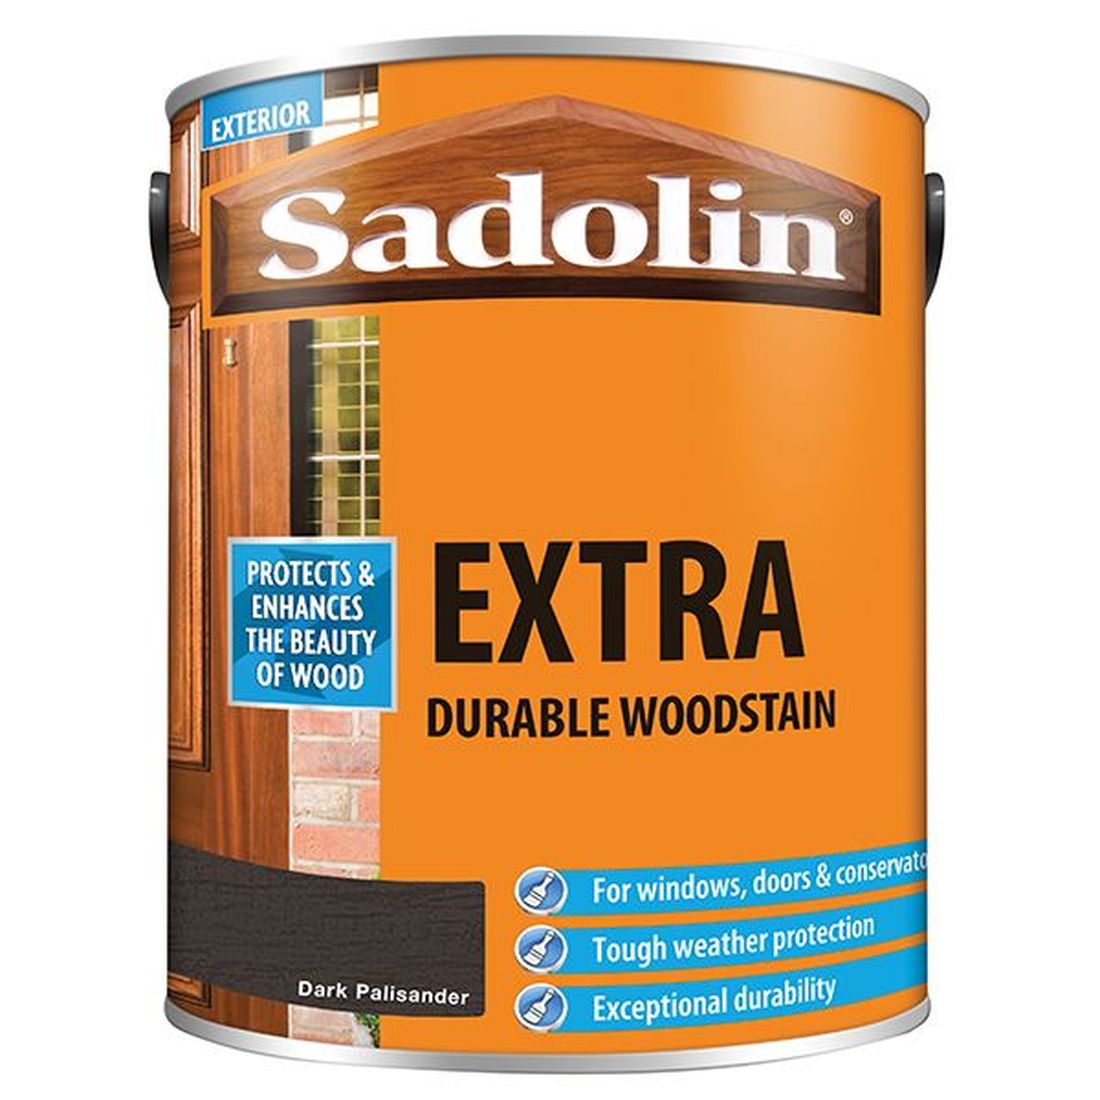 Sadolin Extra Durable Woodstain Dark Palisander 5 litre                                 